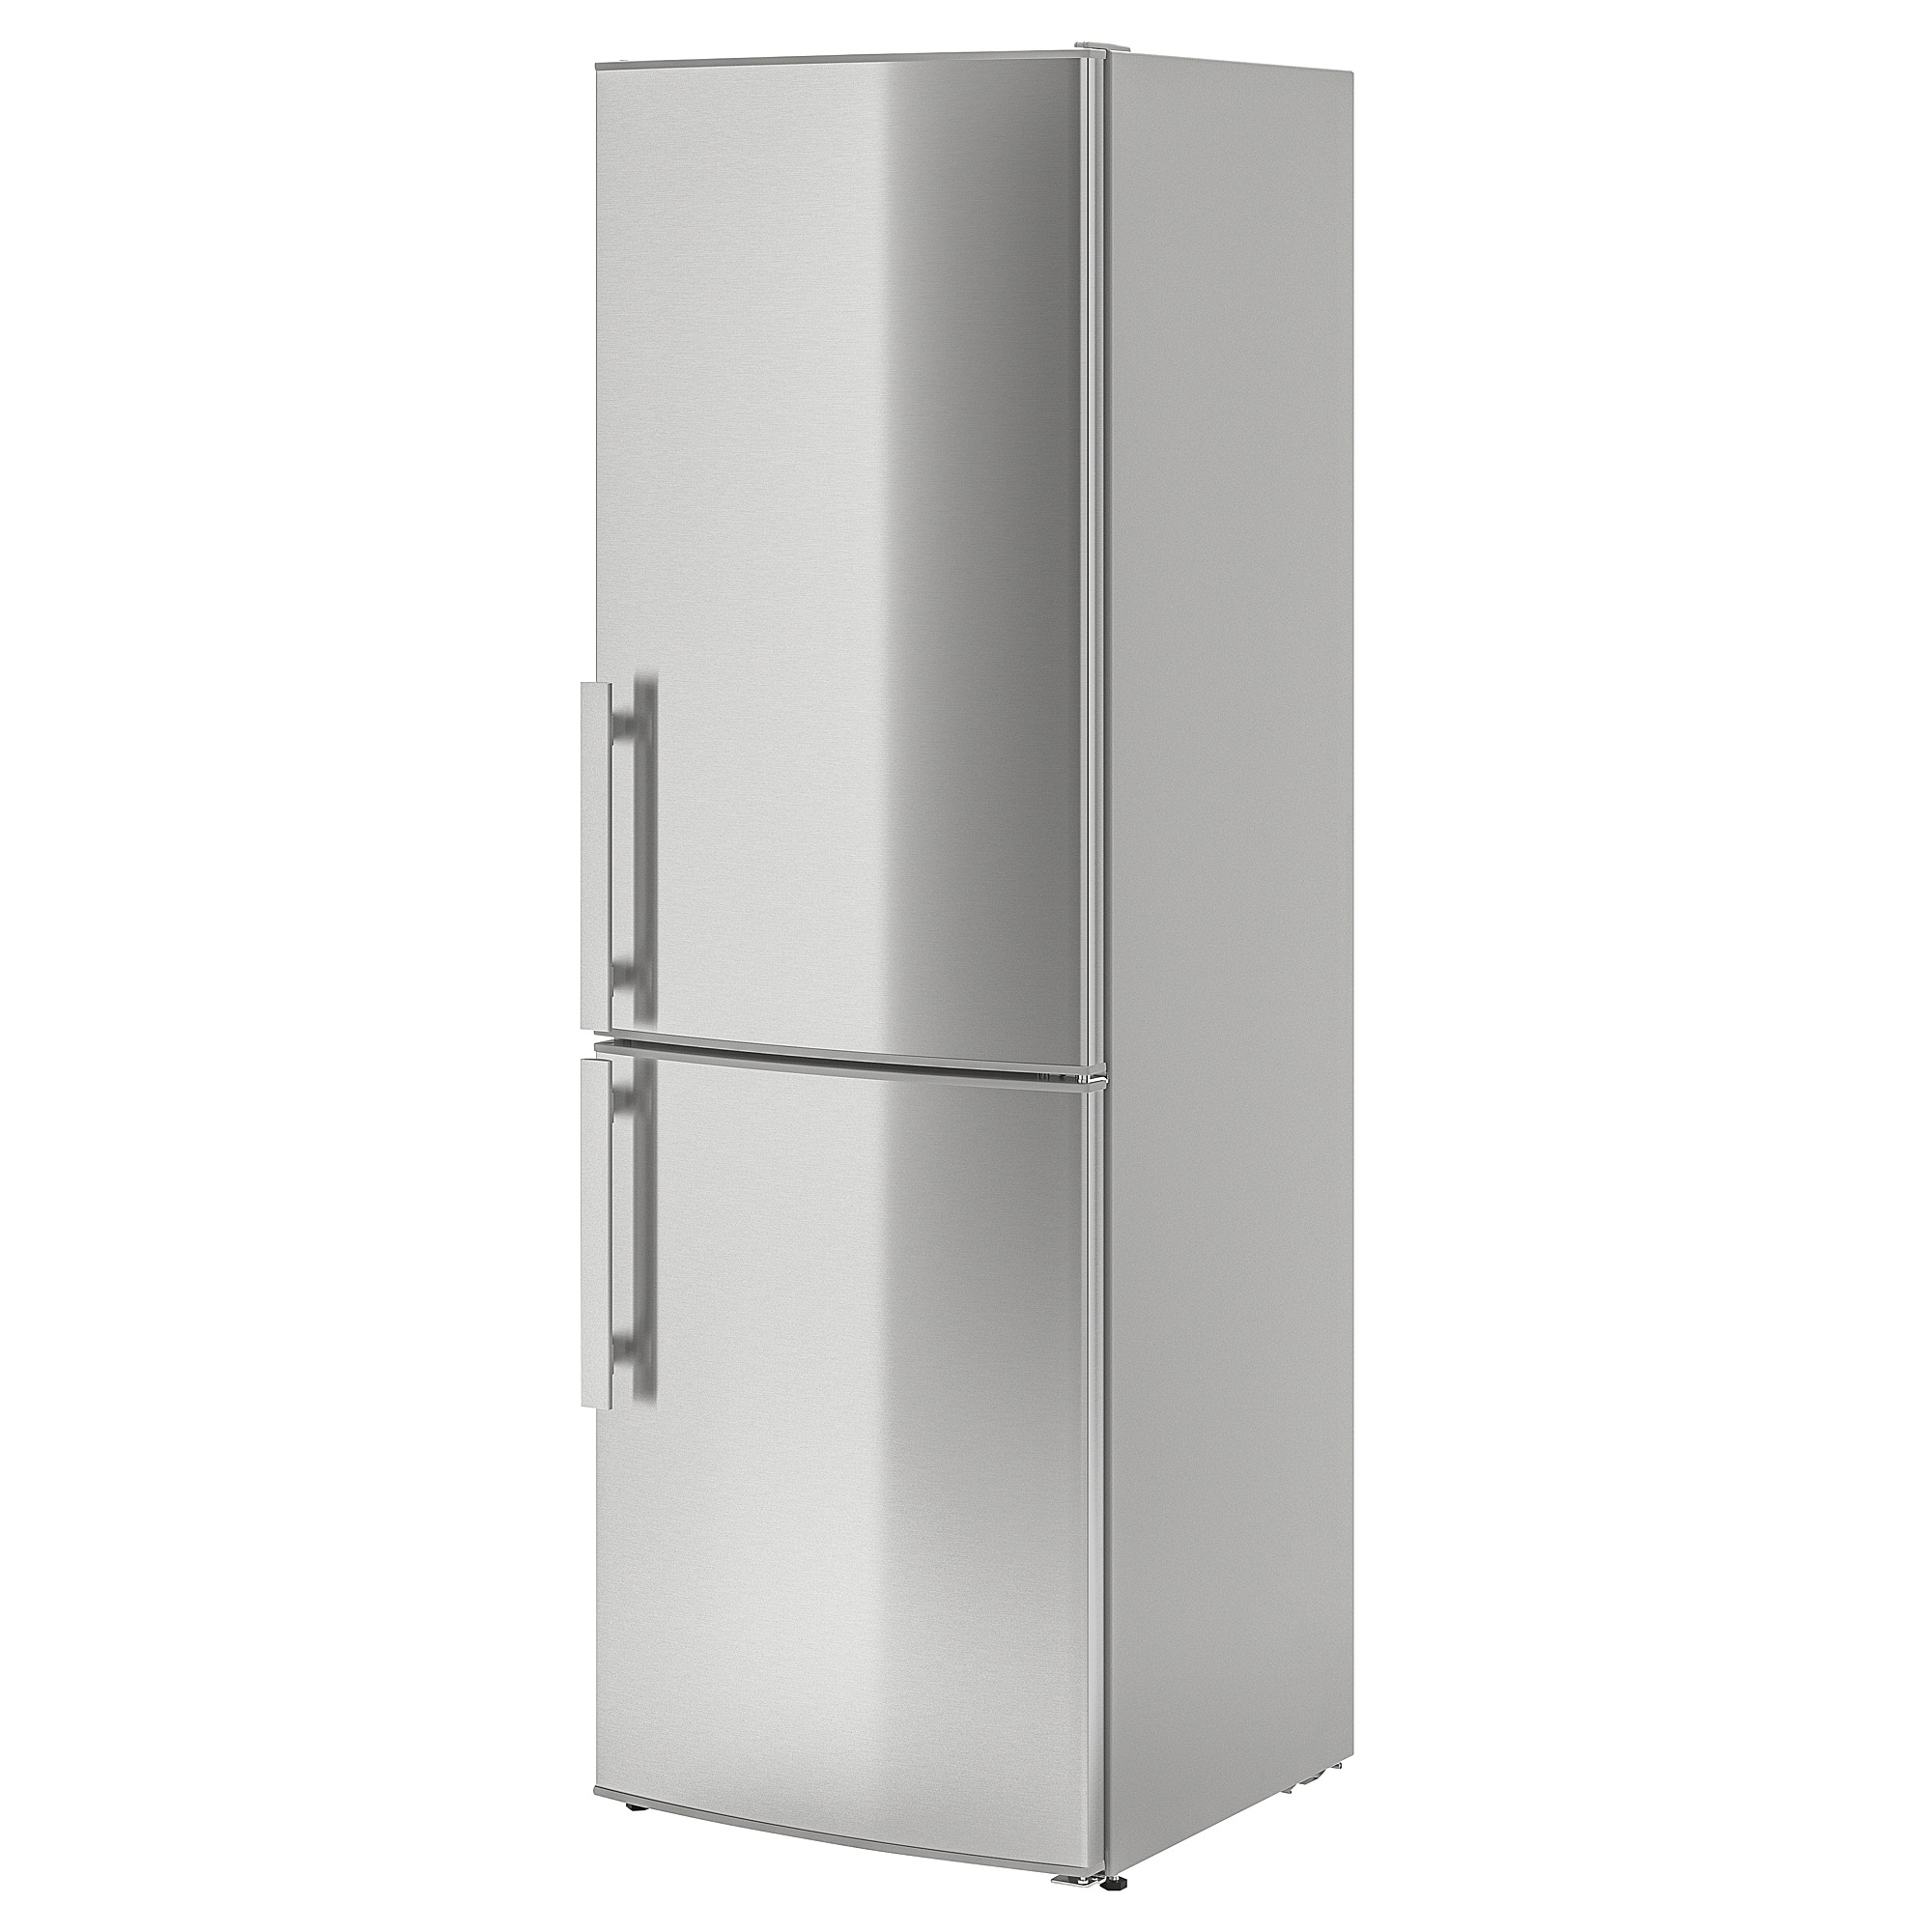 Холодильник морозильник бытовой. Холодильник kylig ikea. Whirlpool холодильник ikea. Холодильник Hisense rb343d4cw1. Икеа Вирпул холодильник.